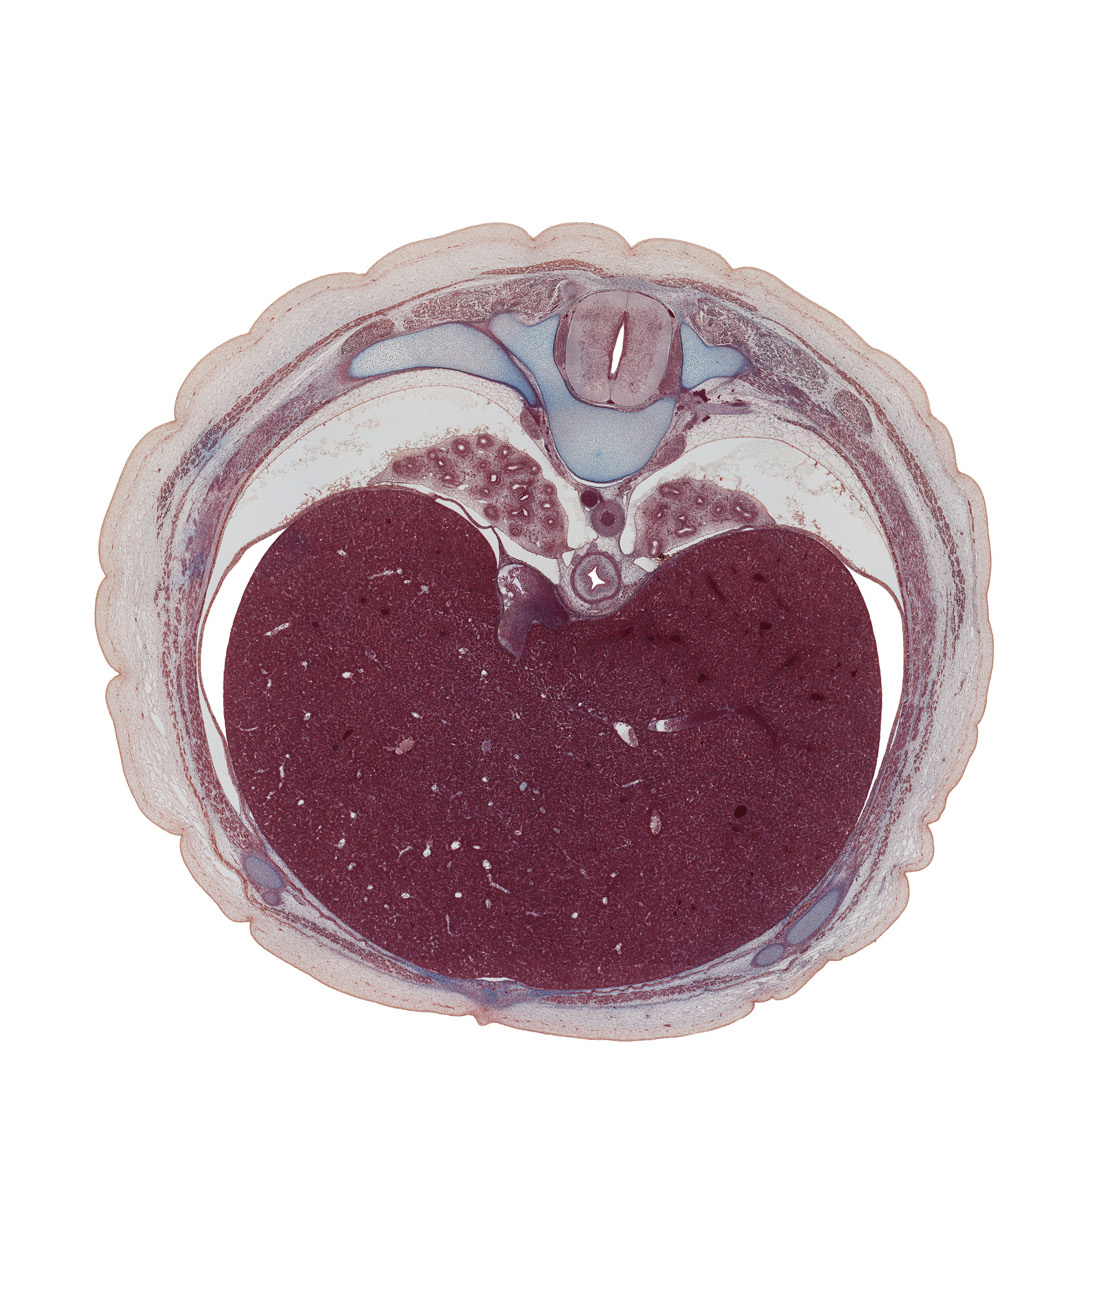 T-8 spinal ganglion, anterior gastric nerve (CN X), anterior rectus sheath, common hepatic vein, costal margin, esophagus, external intercostal muscle(s), iliocostalis muscle, inferior vena cava, innermost intercostal muscle(s), internal intercostal muscle(s), left lobe of liver, longissimus muscle, posterior gastric nerve (CN X), pulmonary ligament, rectus abdominis muscle, right lobe of liver, spinalis muscle, transverse process, transversospinalis muscle, trapezius muscle, tributaries of left hepatic vein